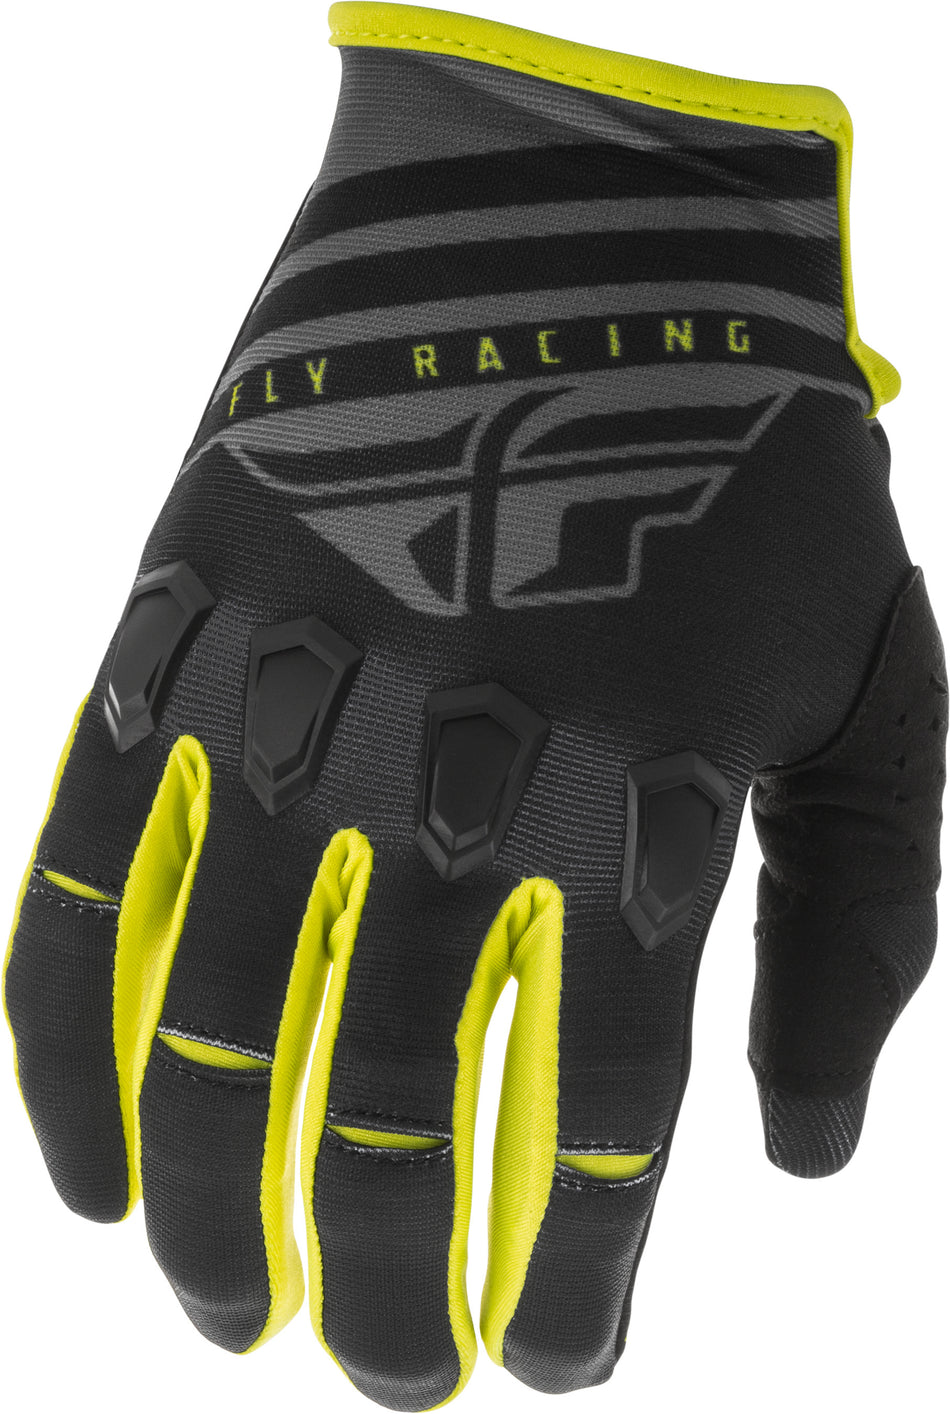 FLY RACING Kinetic K220 Gloves Black/Grey/Hi-Vis Sz 09 373-51509